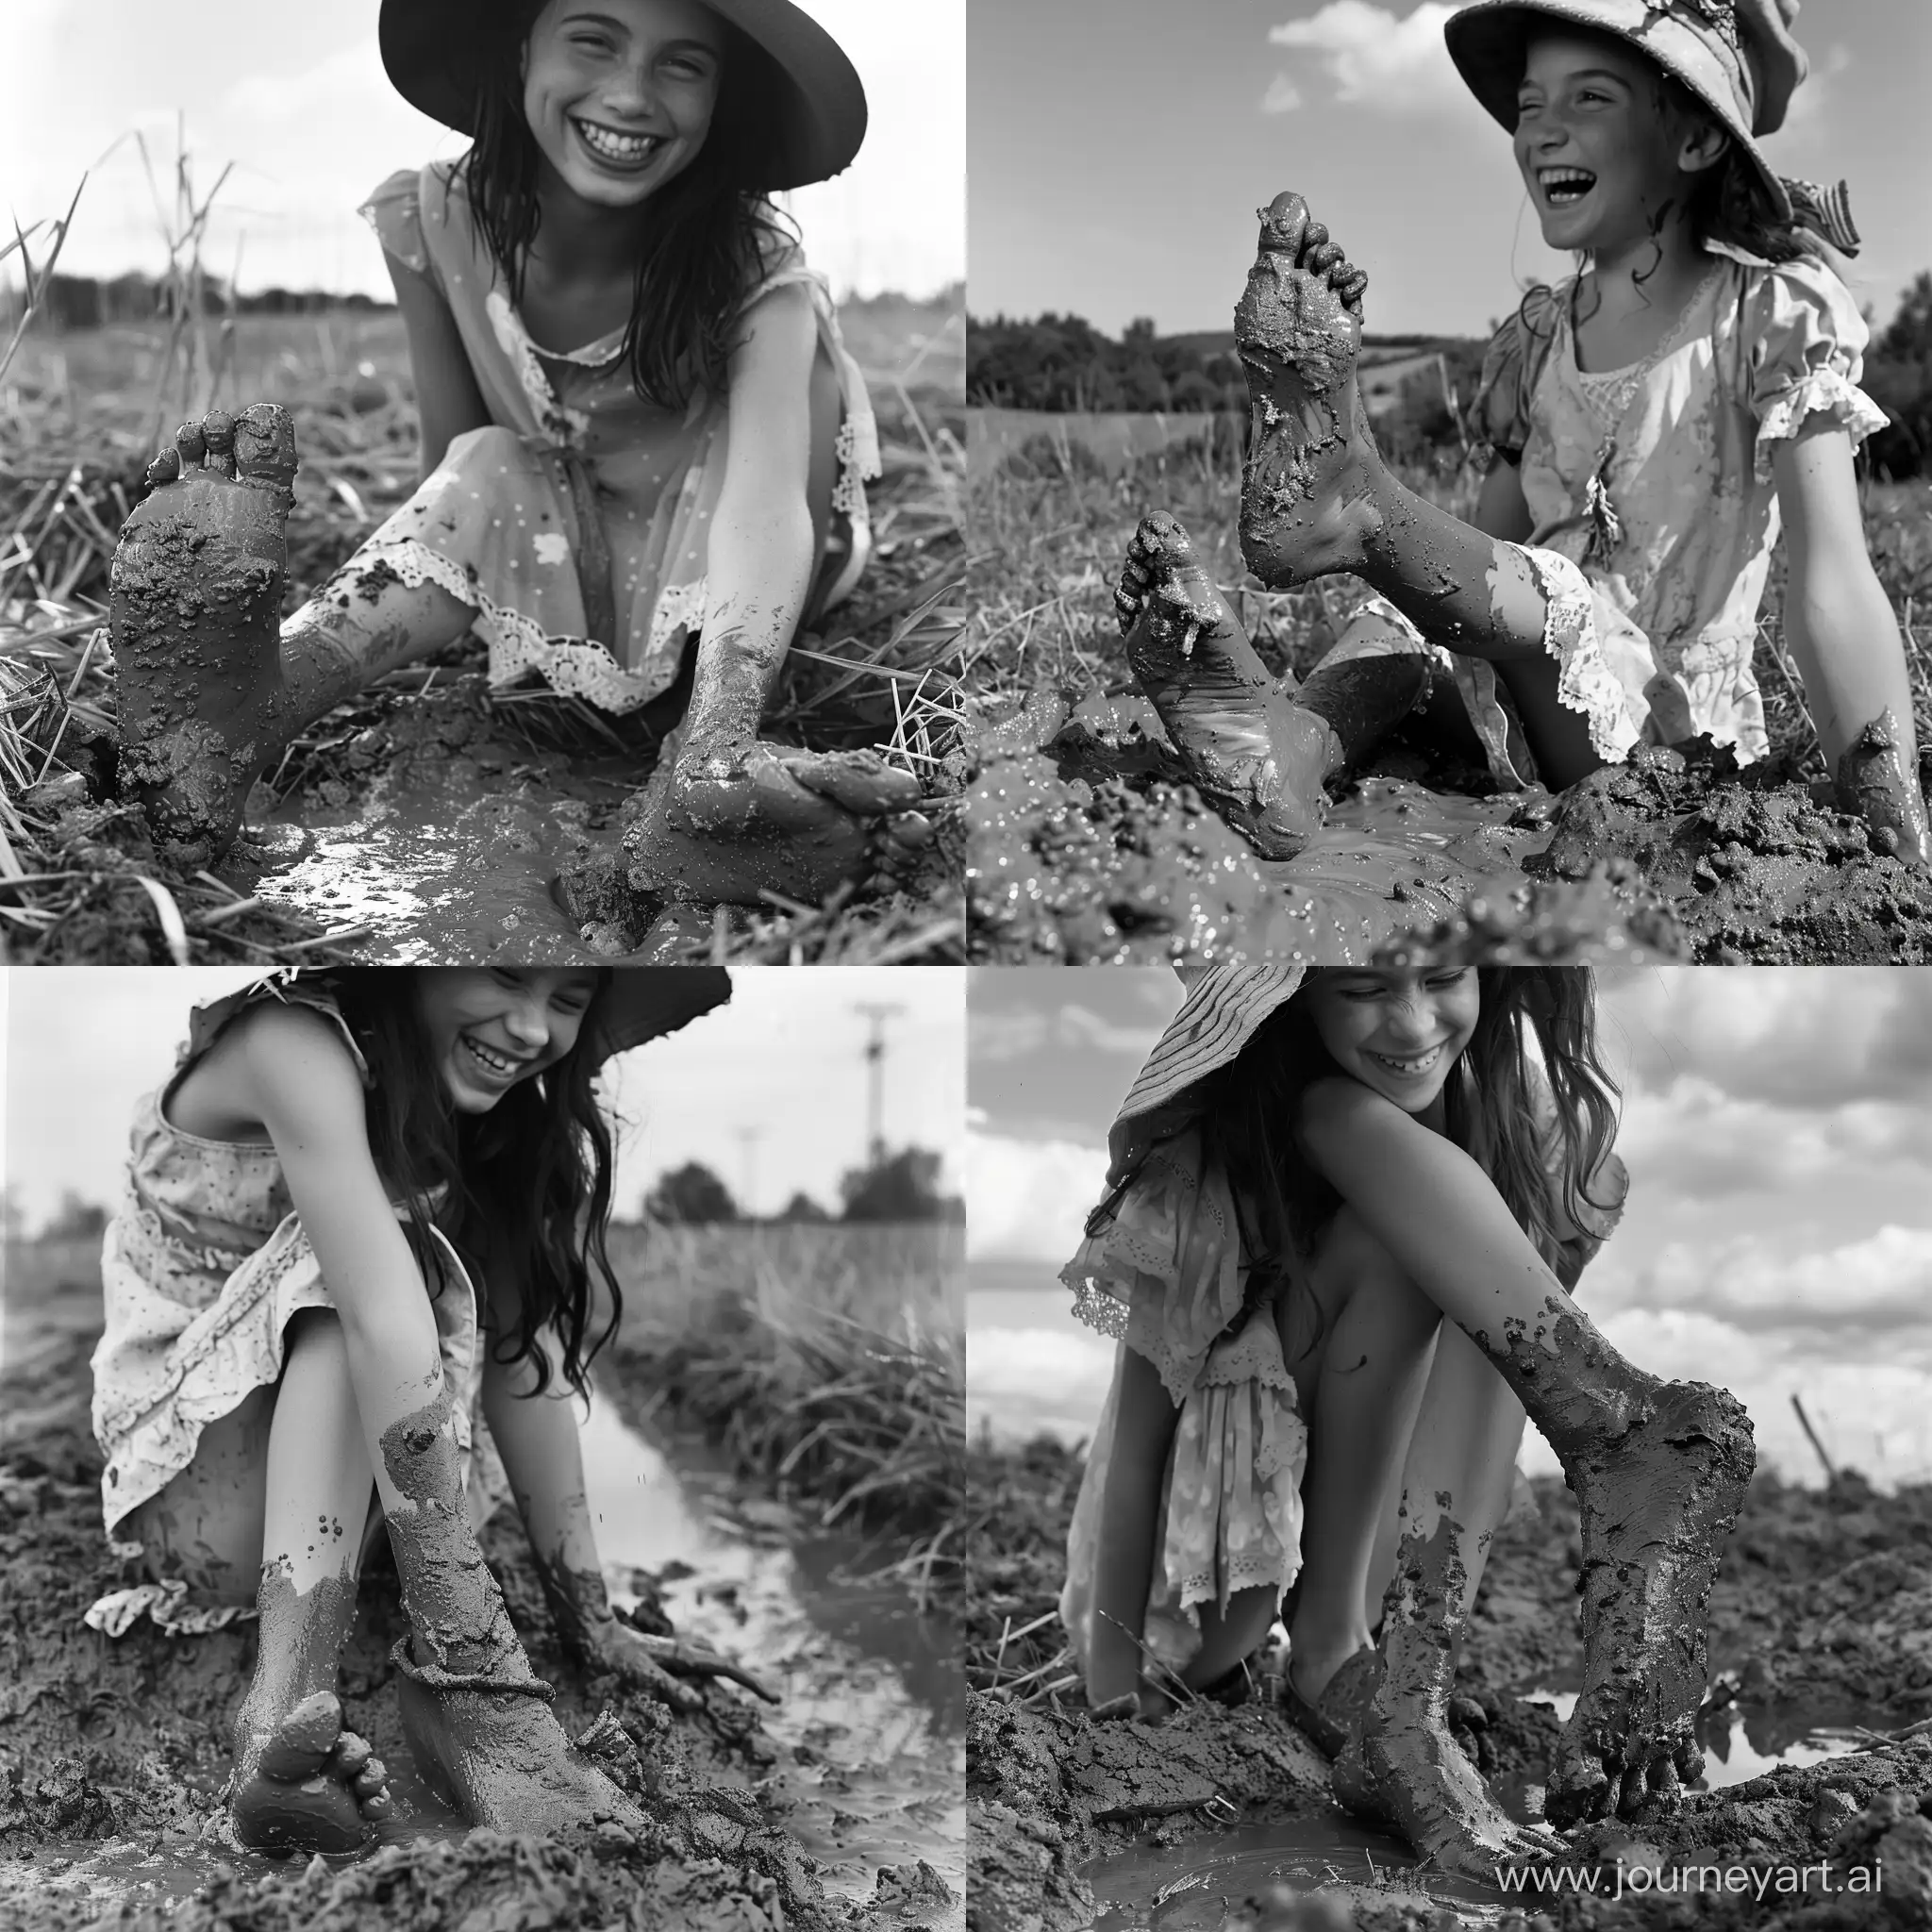 Playful-Girl-in-Dress-and-Hat-Enjoying-Mud-Fun